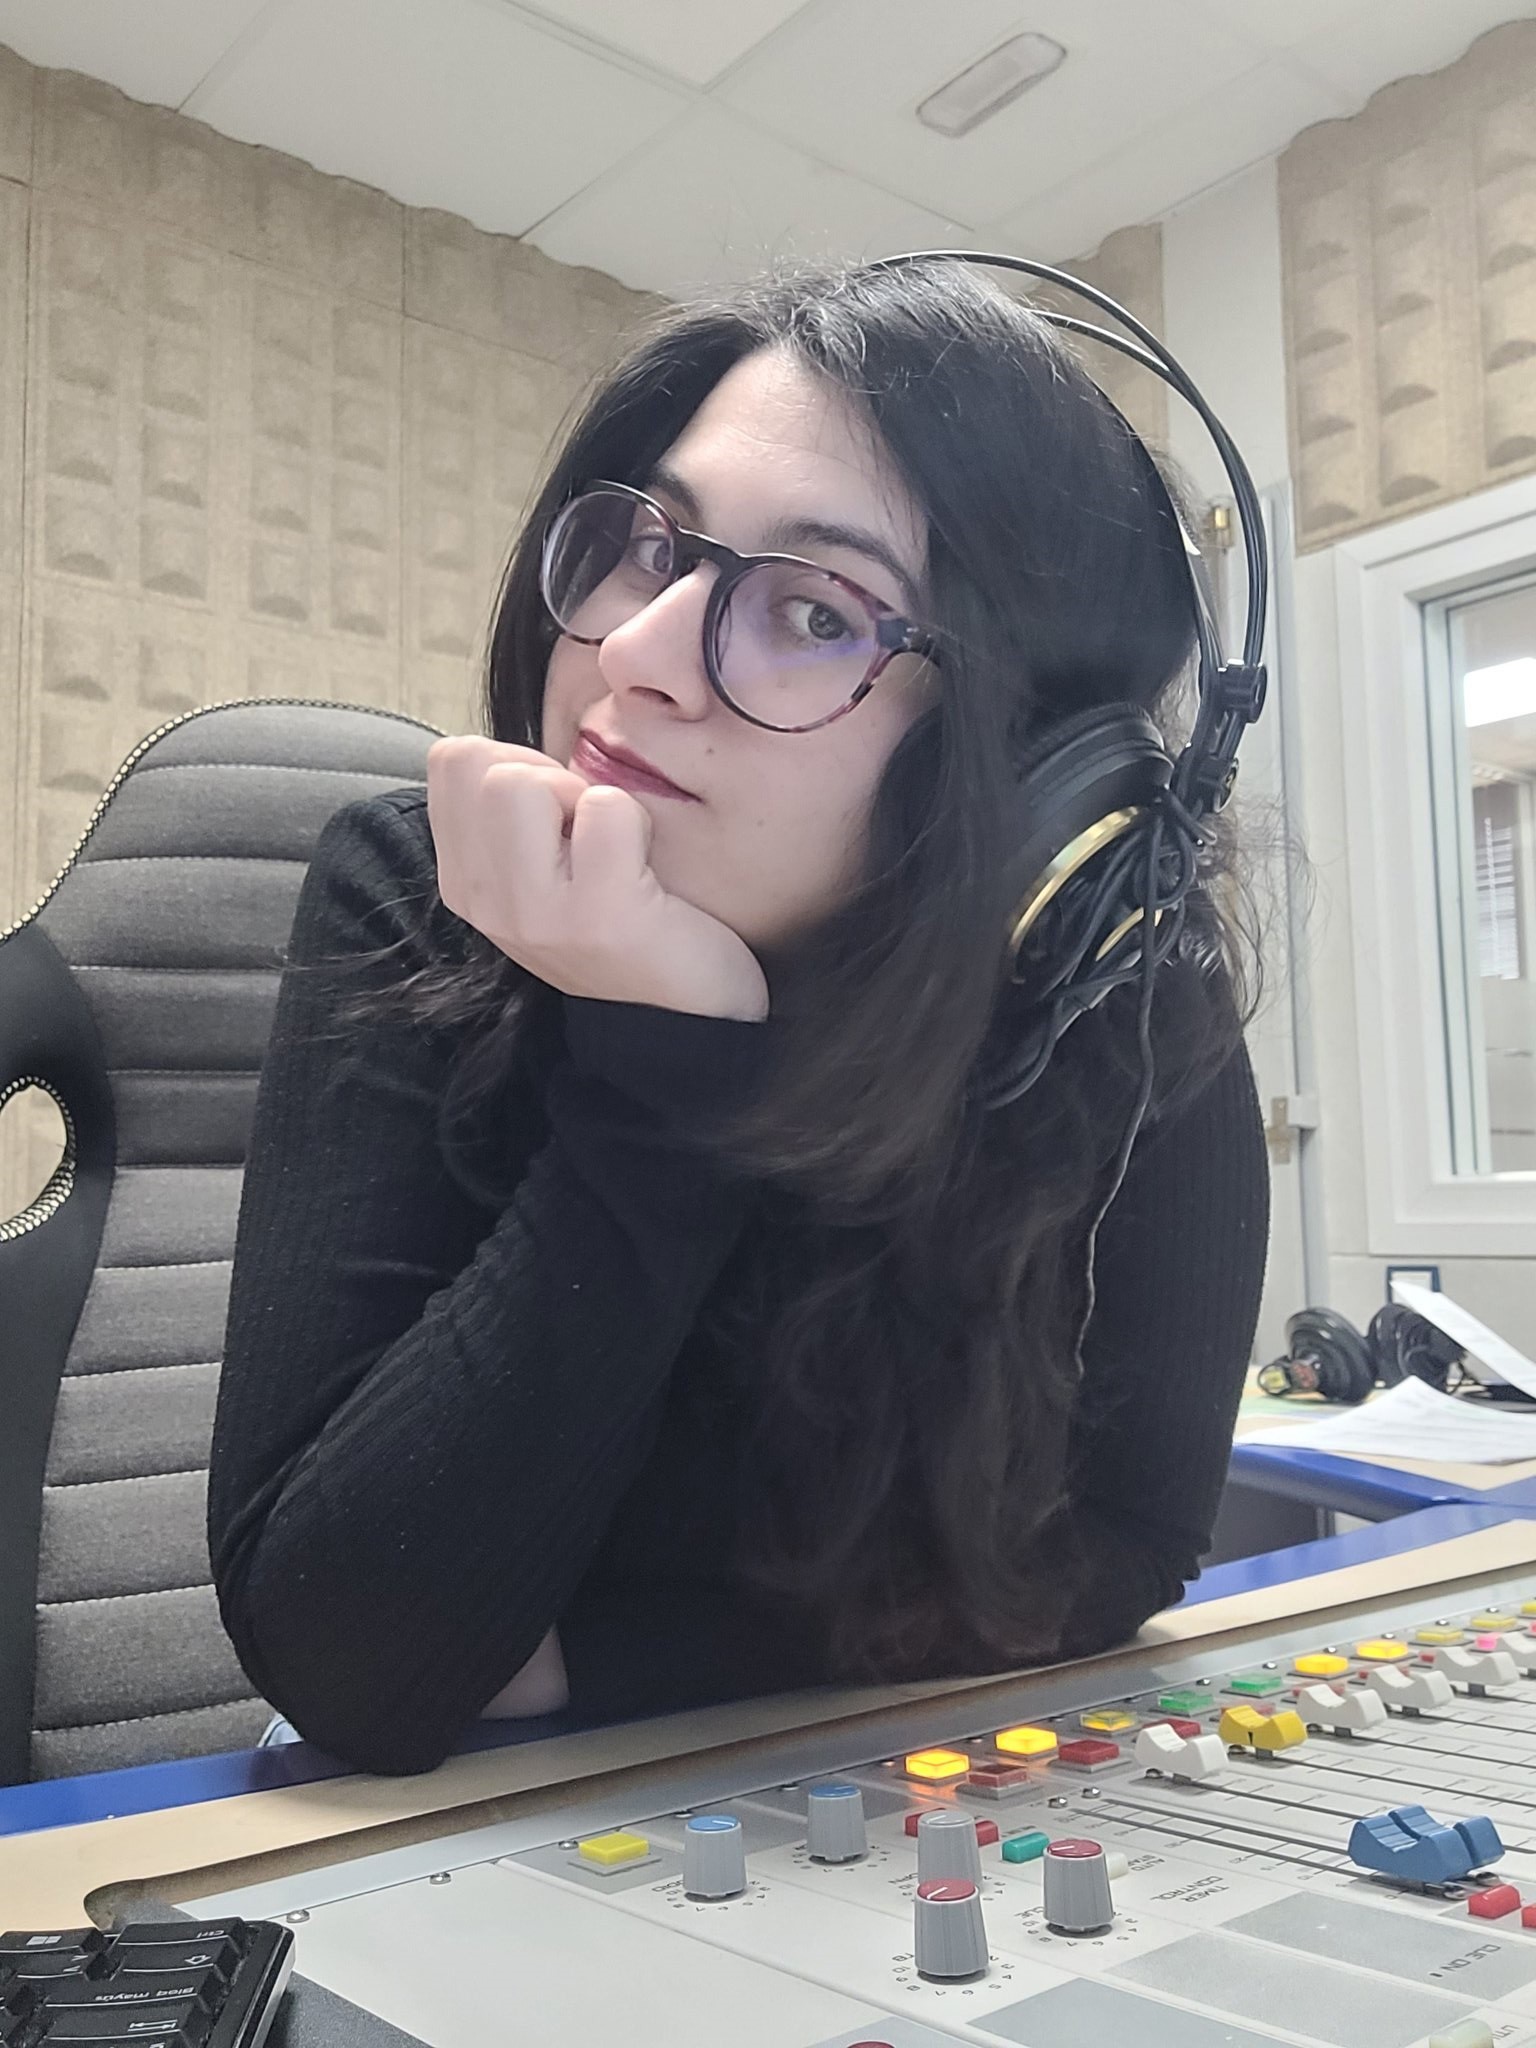 La periodista musical toledana Arancha Sánchez